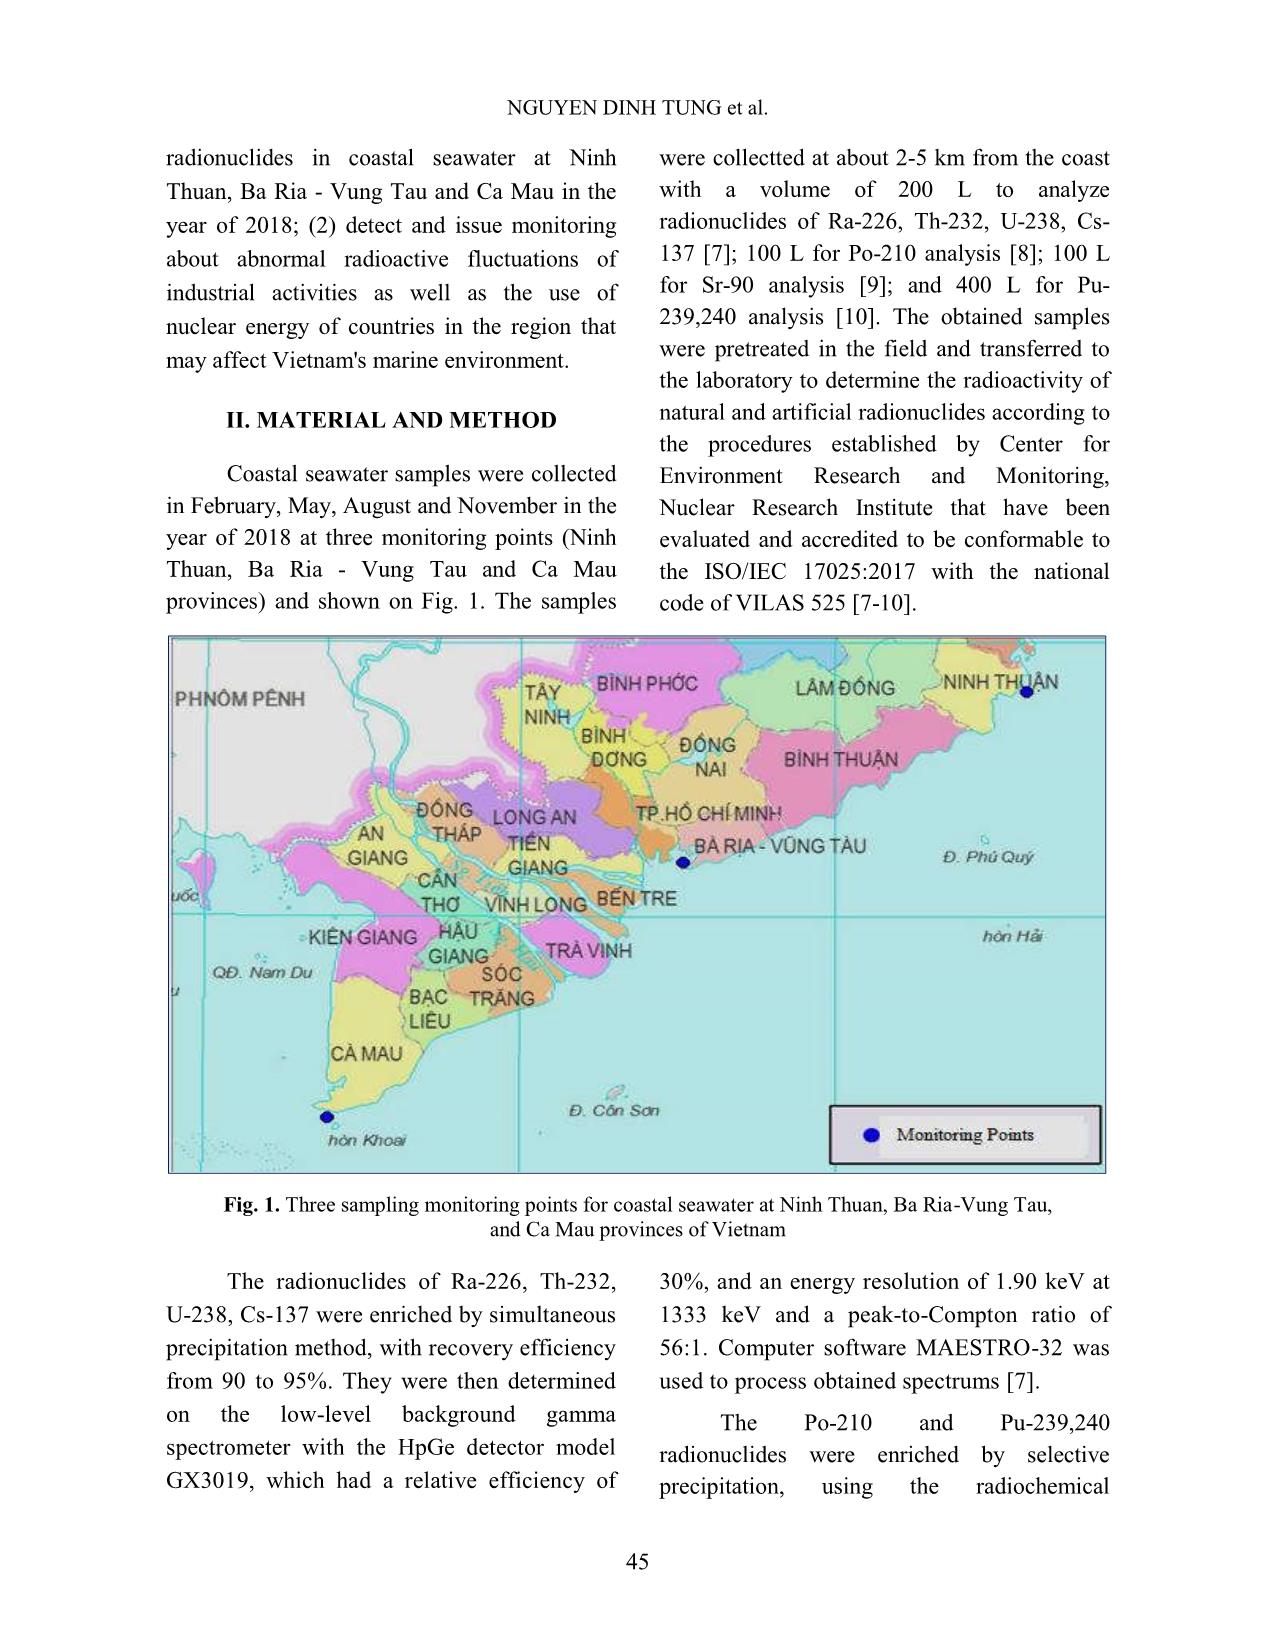 Radioactivity of some natural and artificial radionuclides in coastal seawater at Ninh Thuan, Ba Ria - Vung Tau and Ca Mau provinces in 2018 trang 2